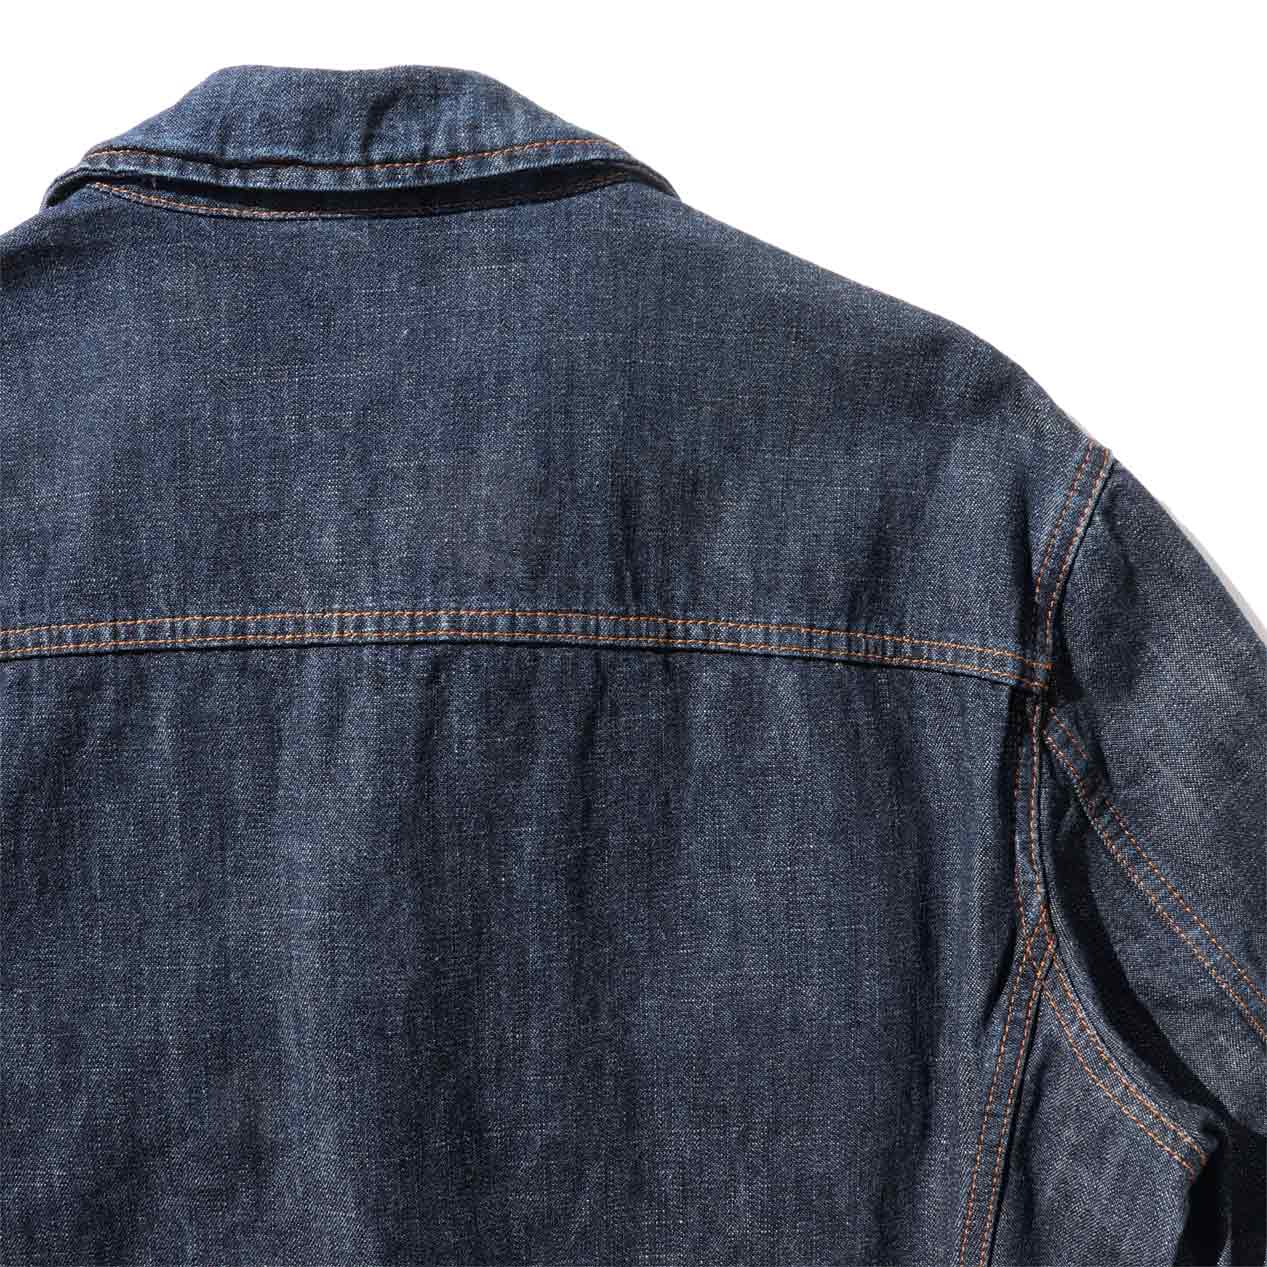 POST JUNK / 00’s MIU MIU Denim S/S Shirt Jacket Made In Italy [L]